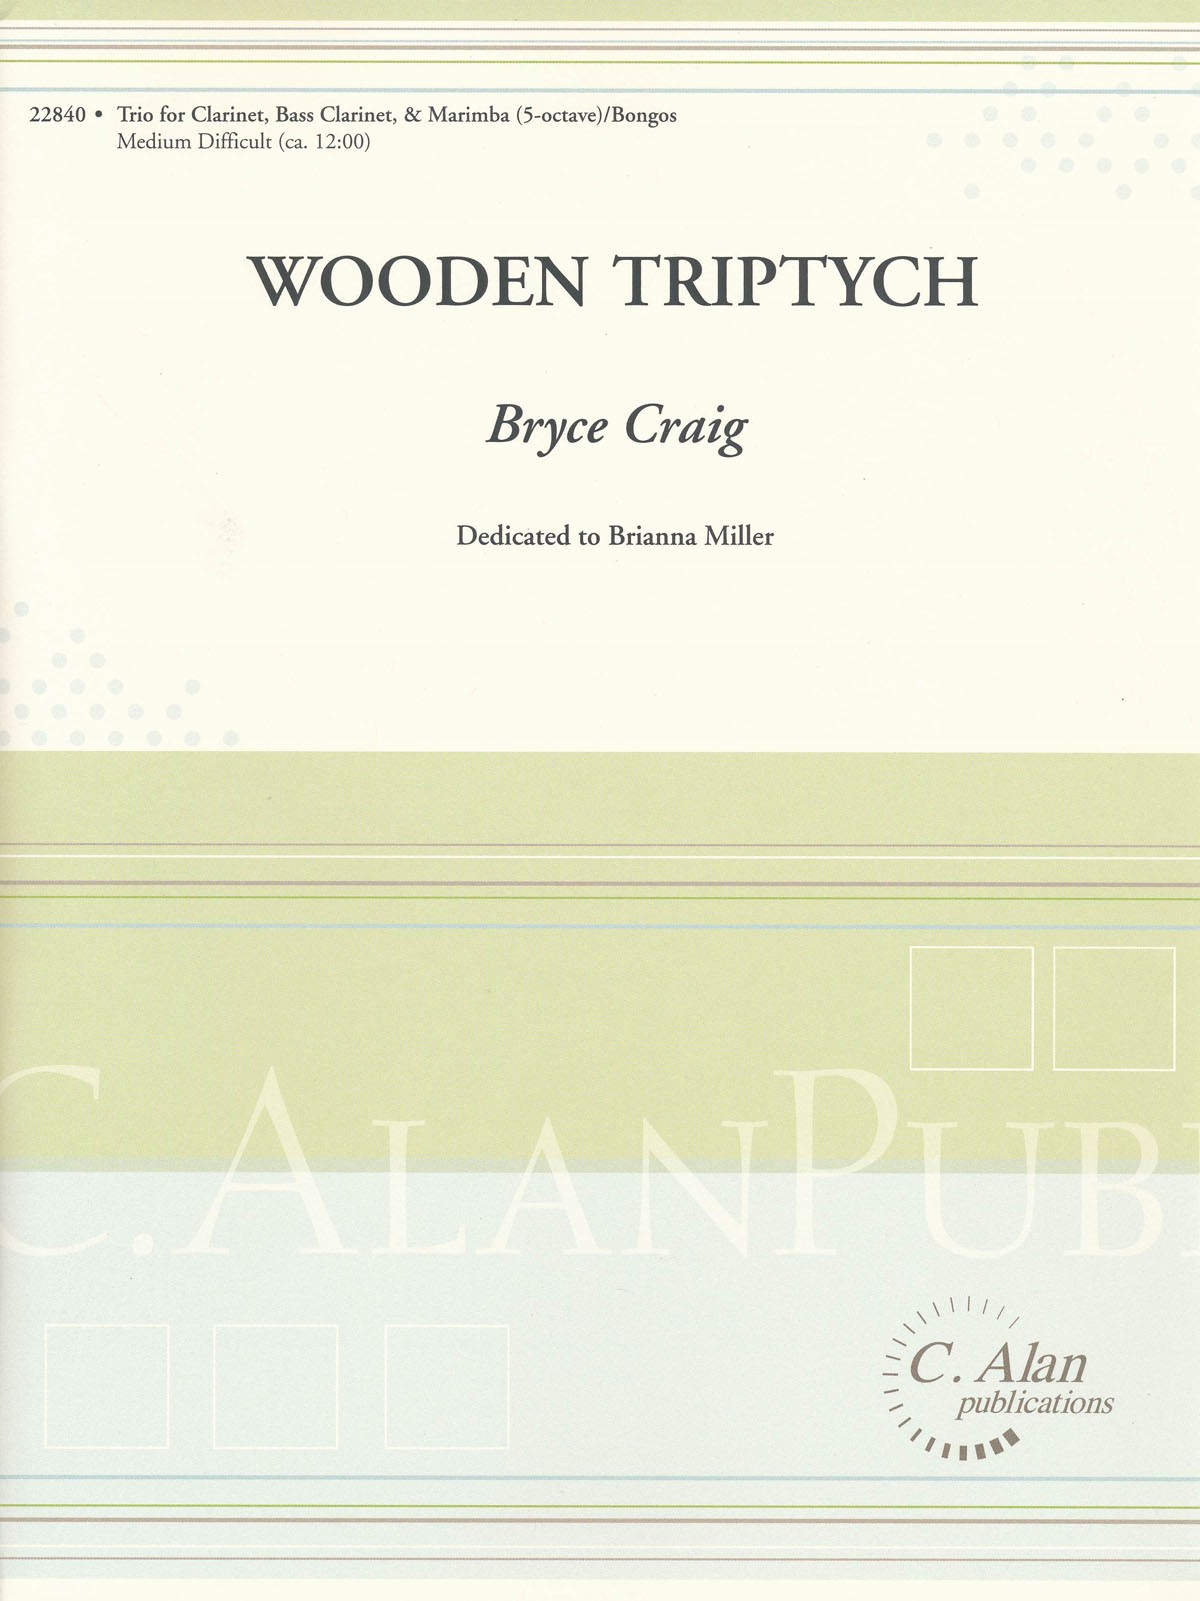 Wooden Triptych by Bryce Craig